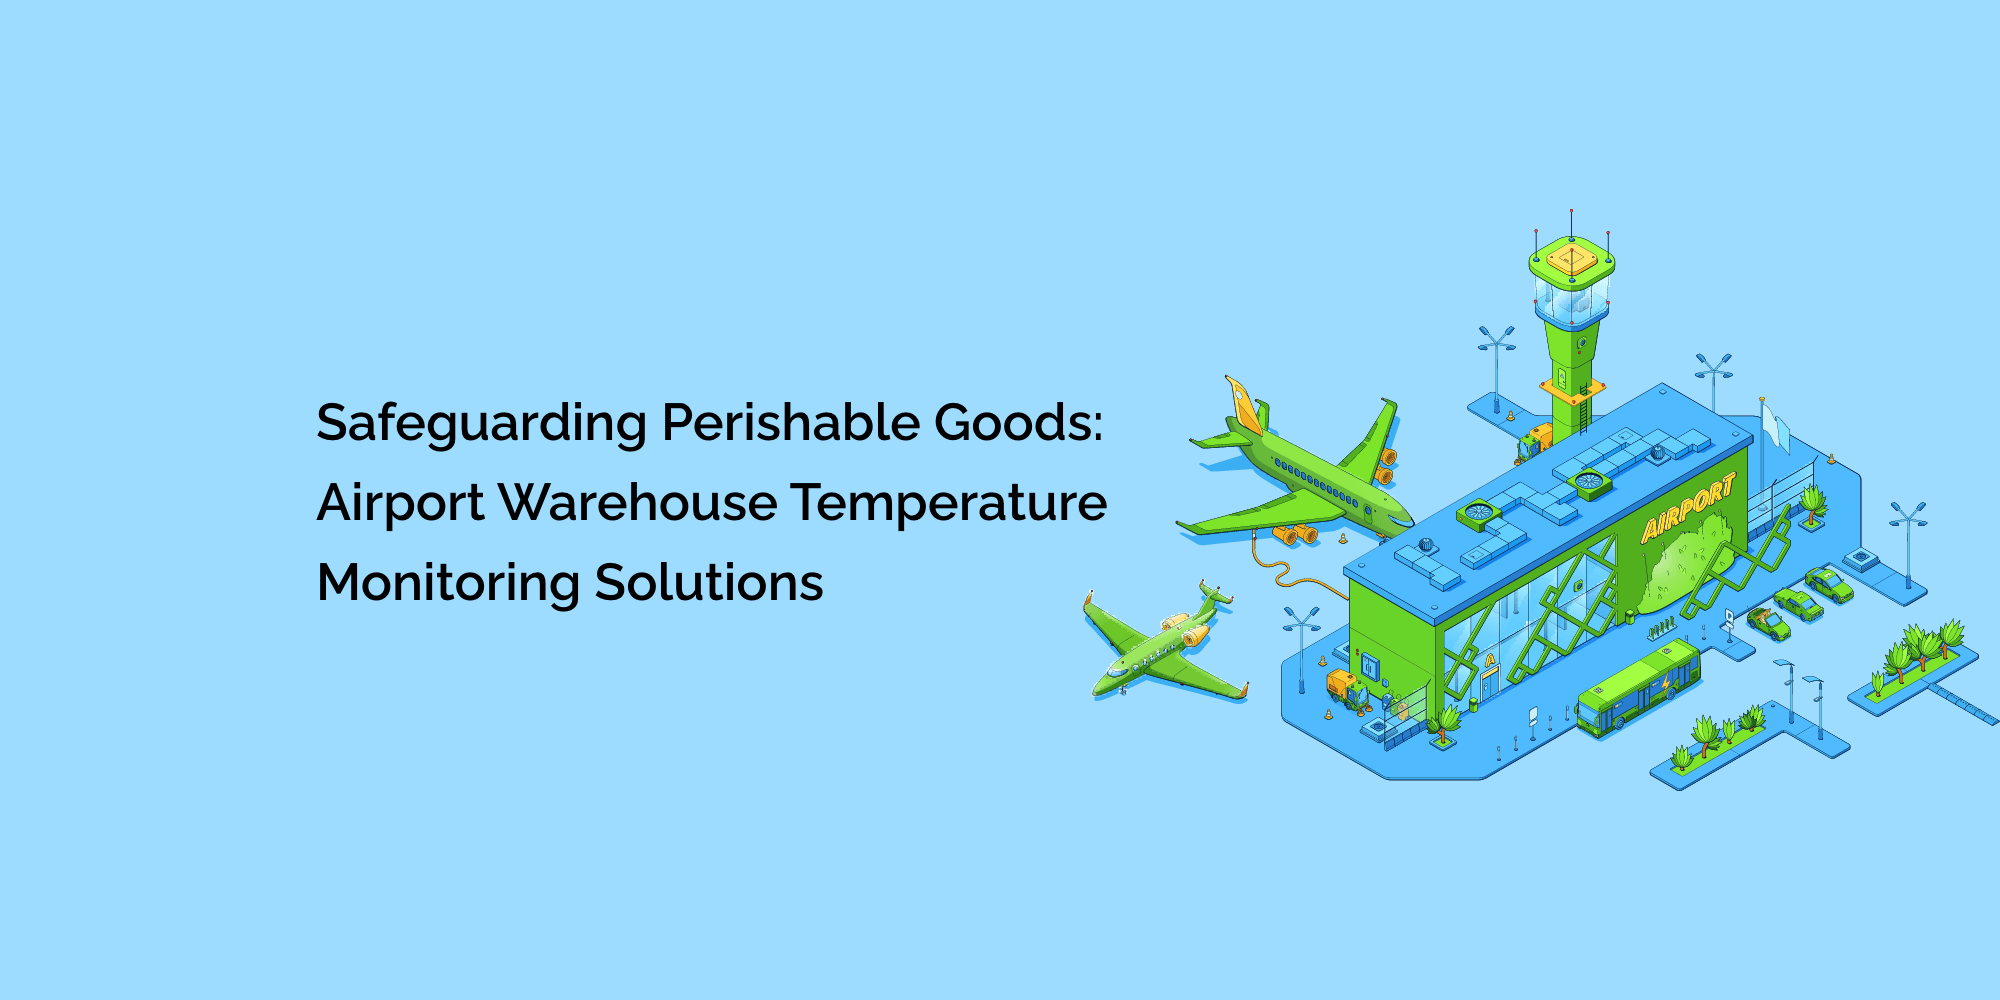 Safeguarding Perishable Goods: Airport Warehouse Temperature Monitoring Solutions